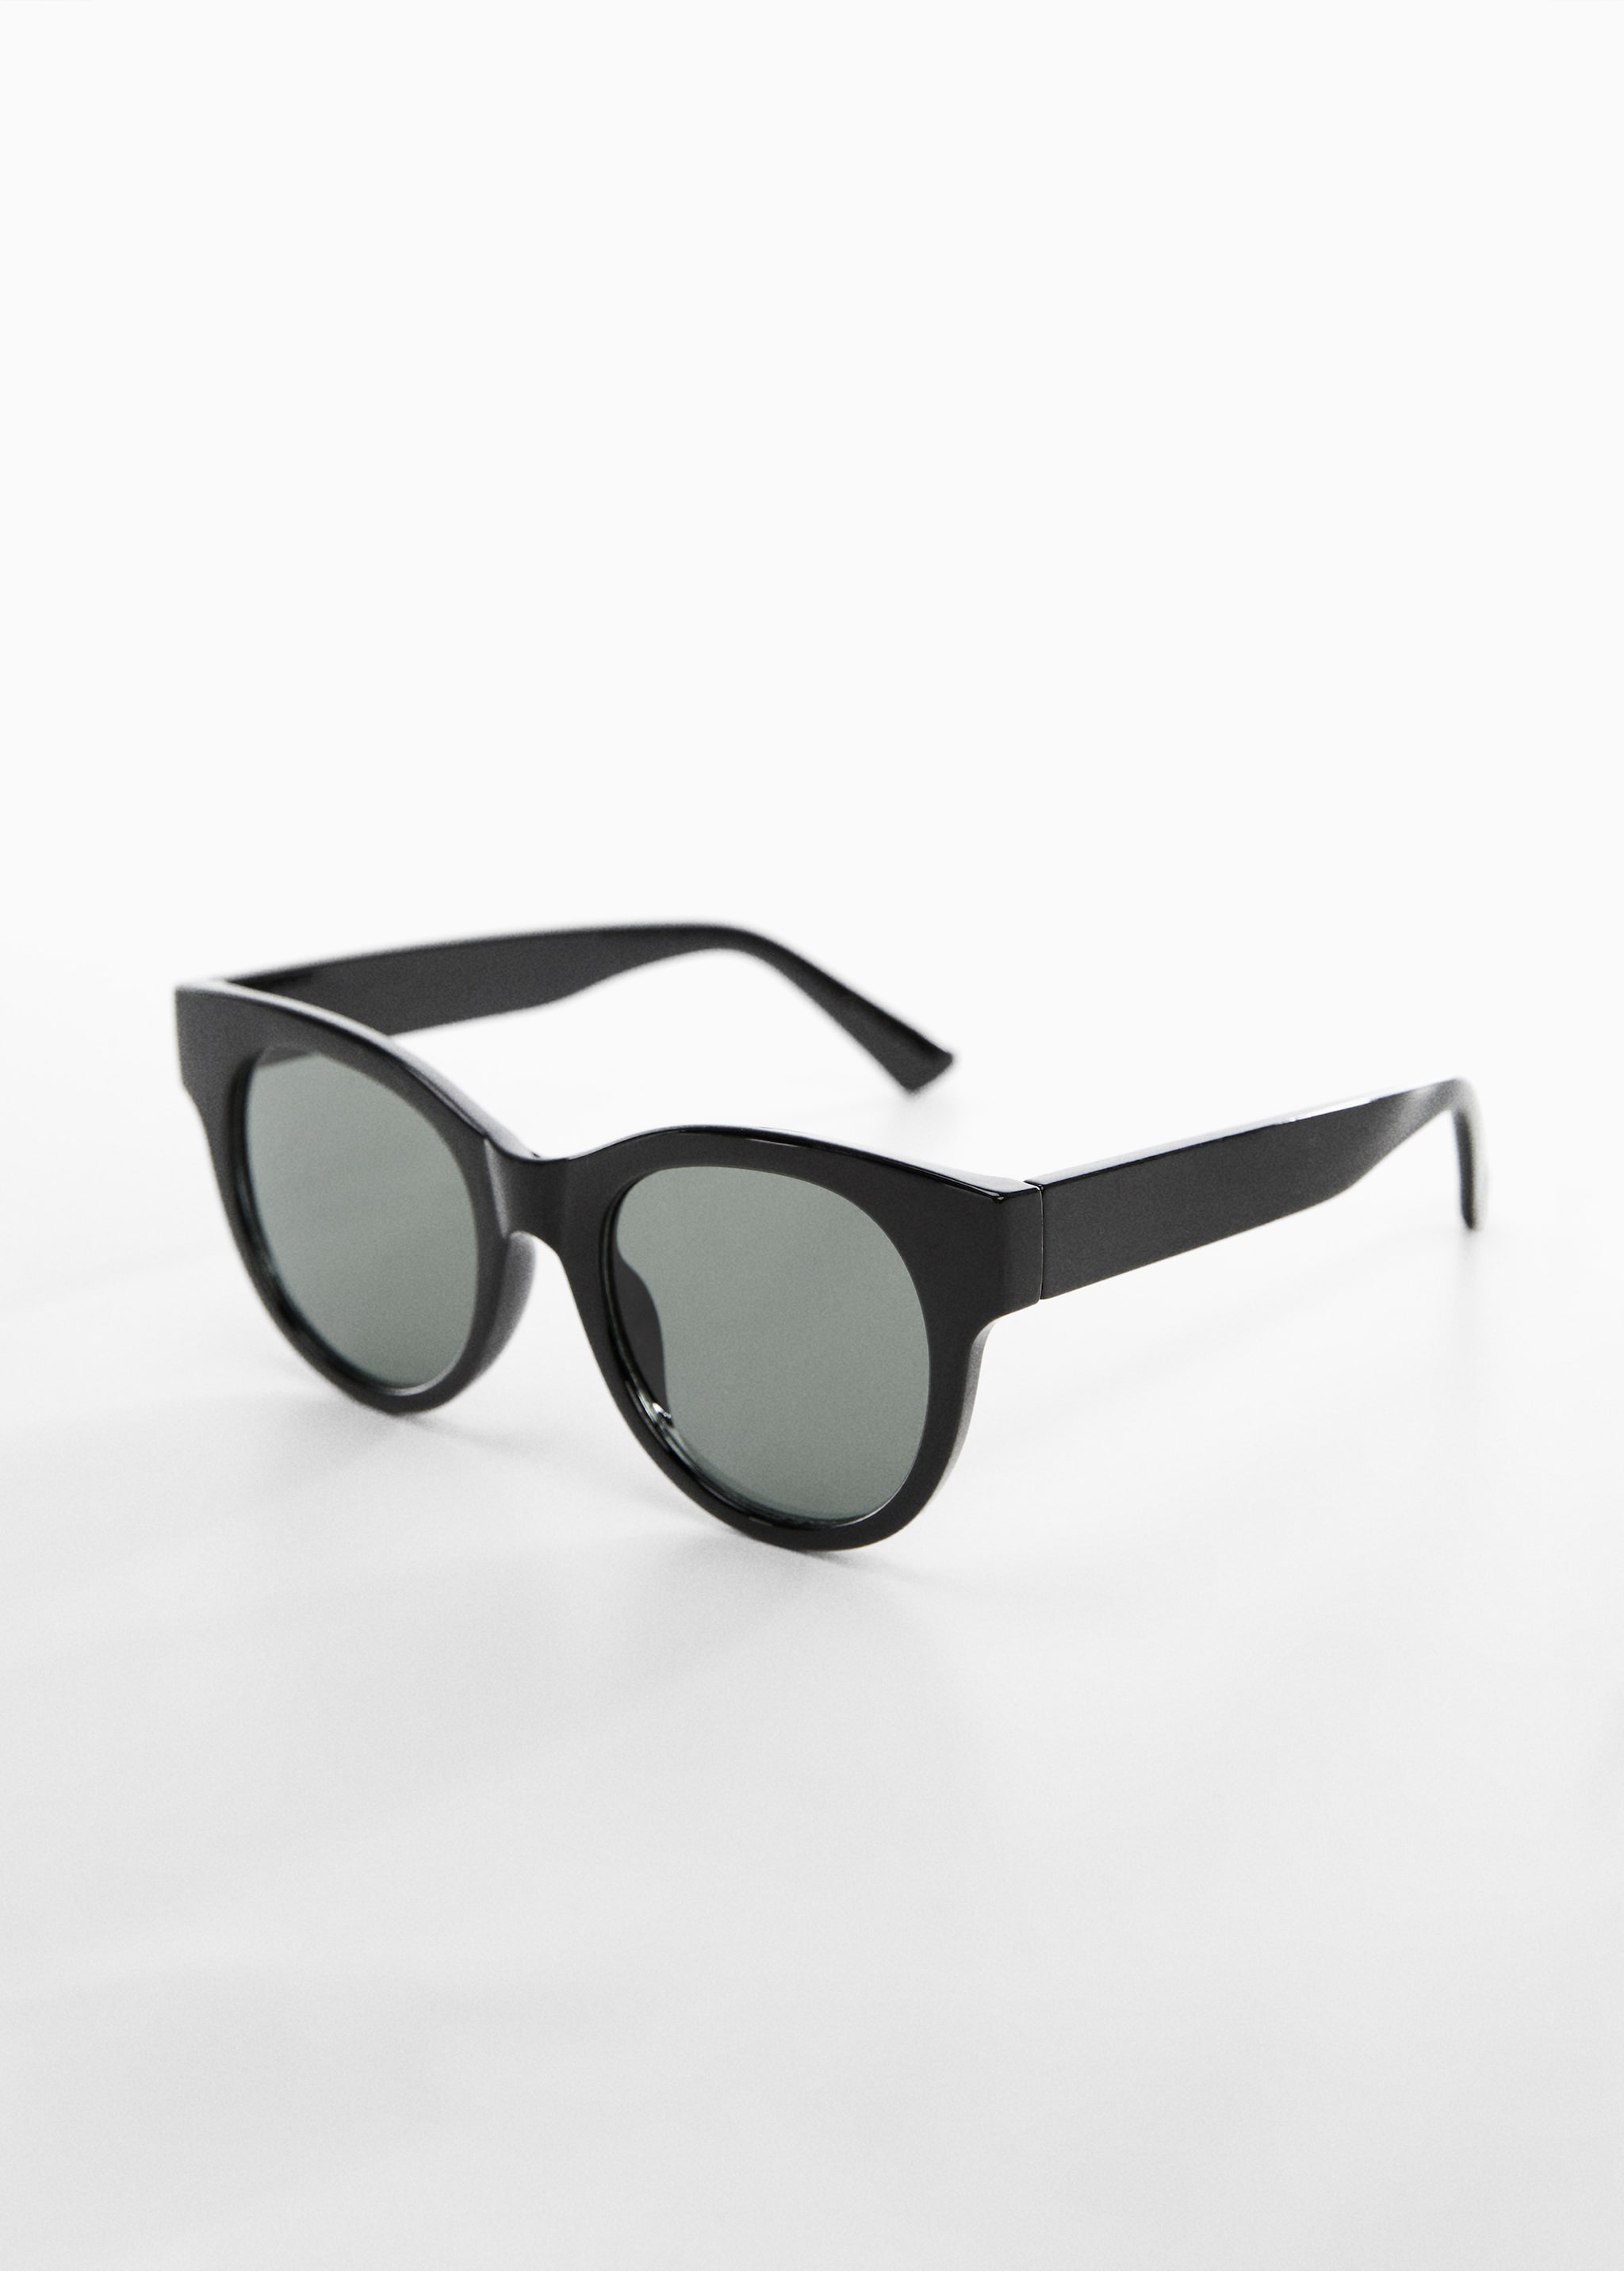 Tortoiseshell sunglasses - Medium plane